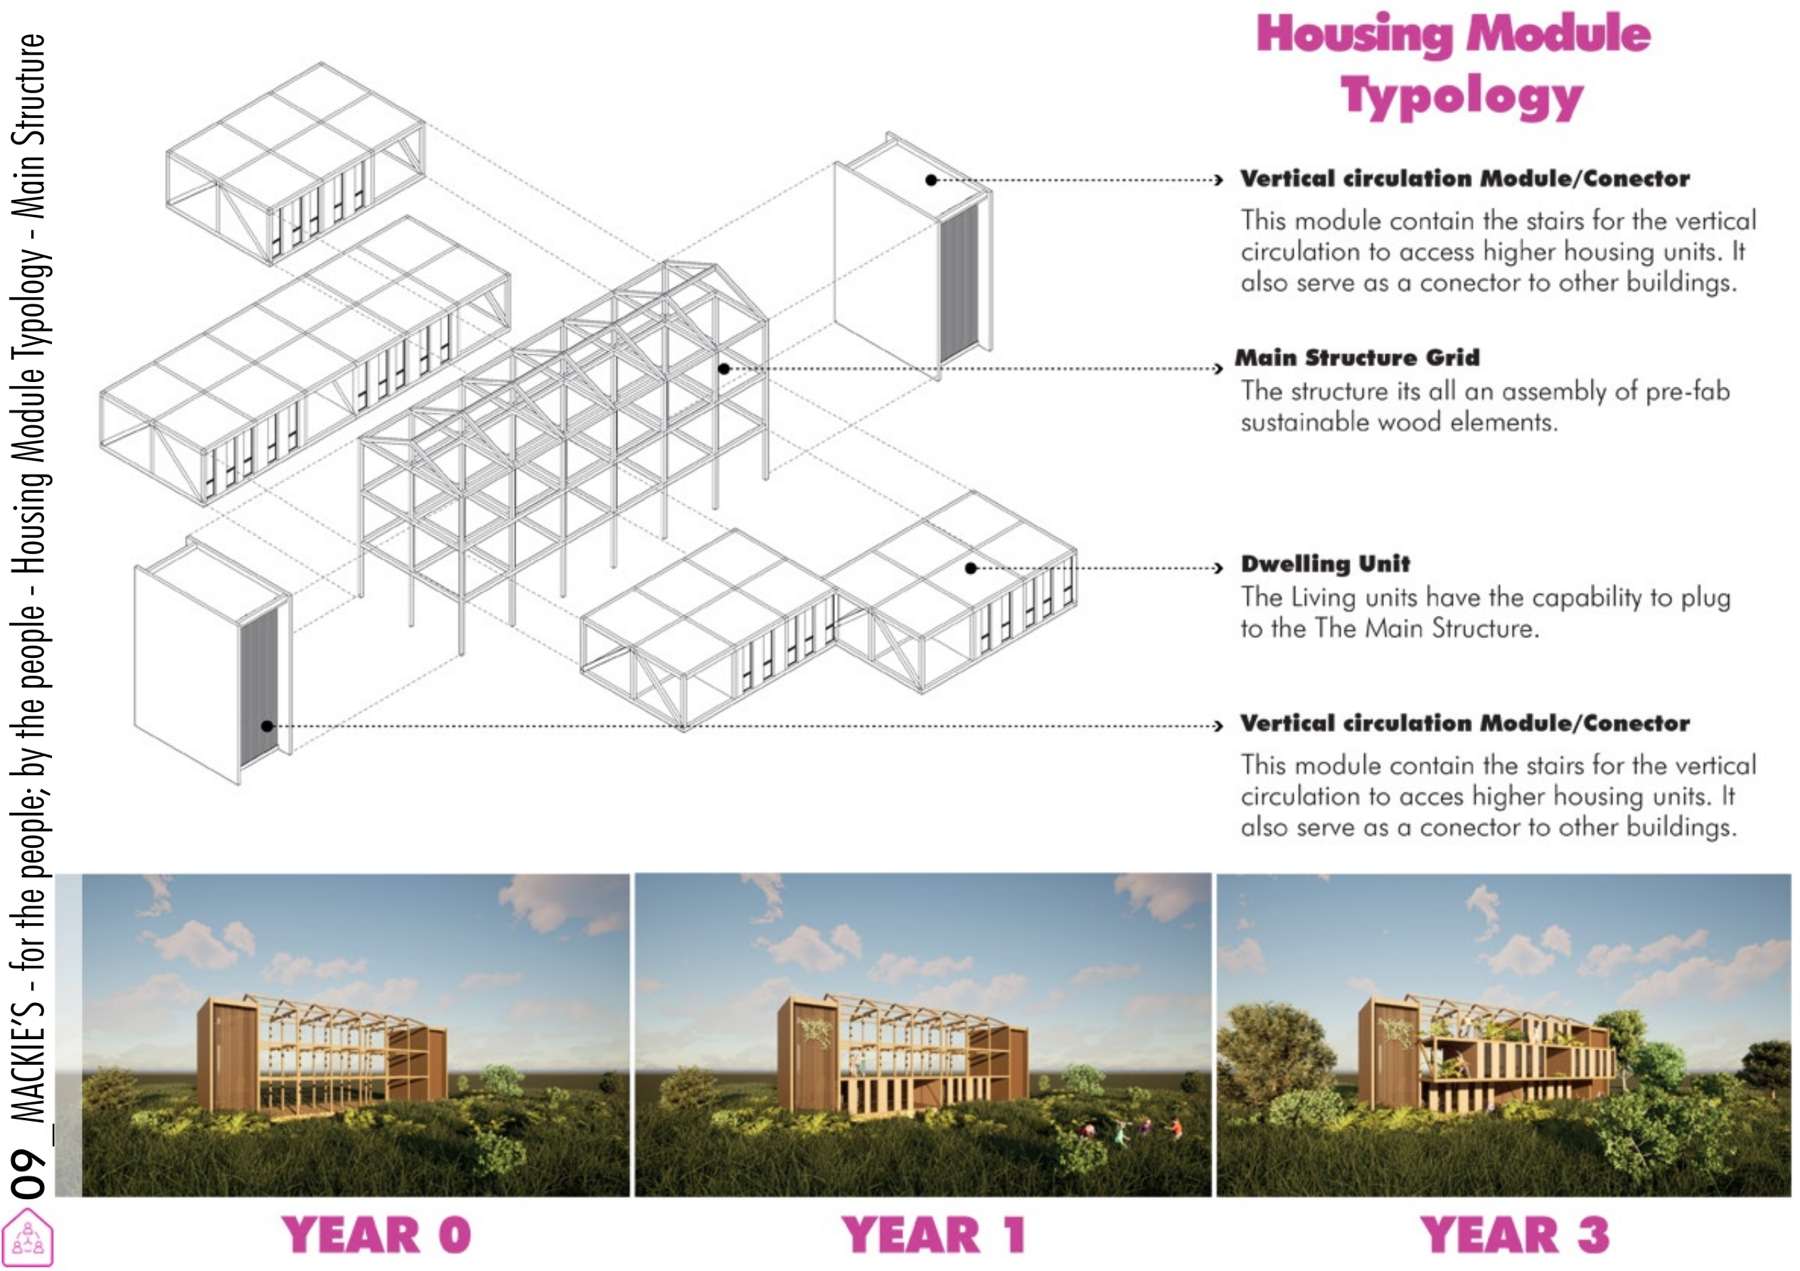 Housing module typology